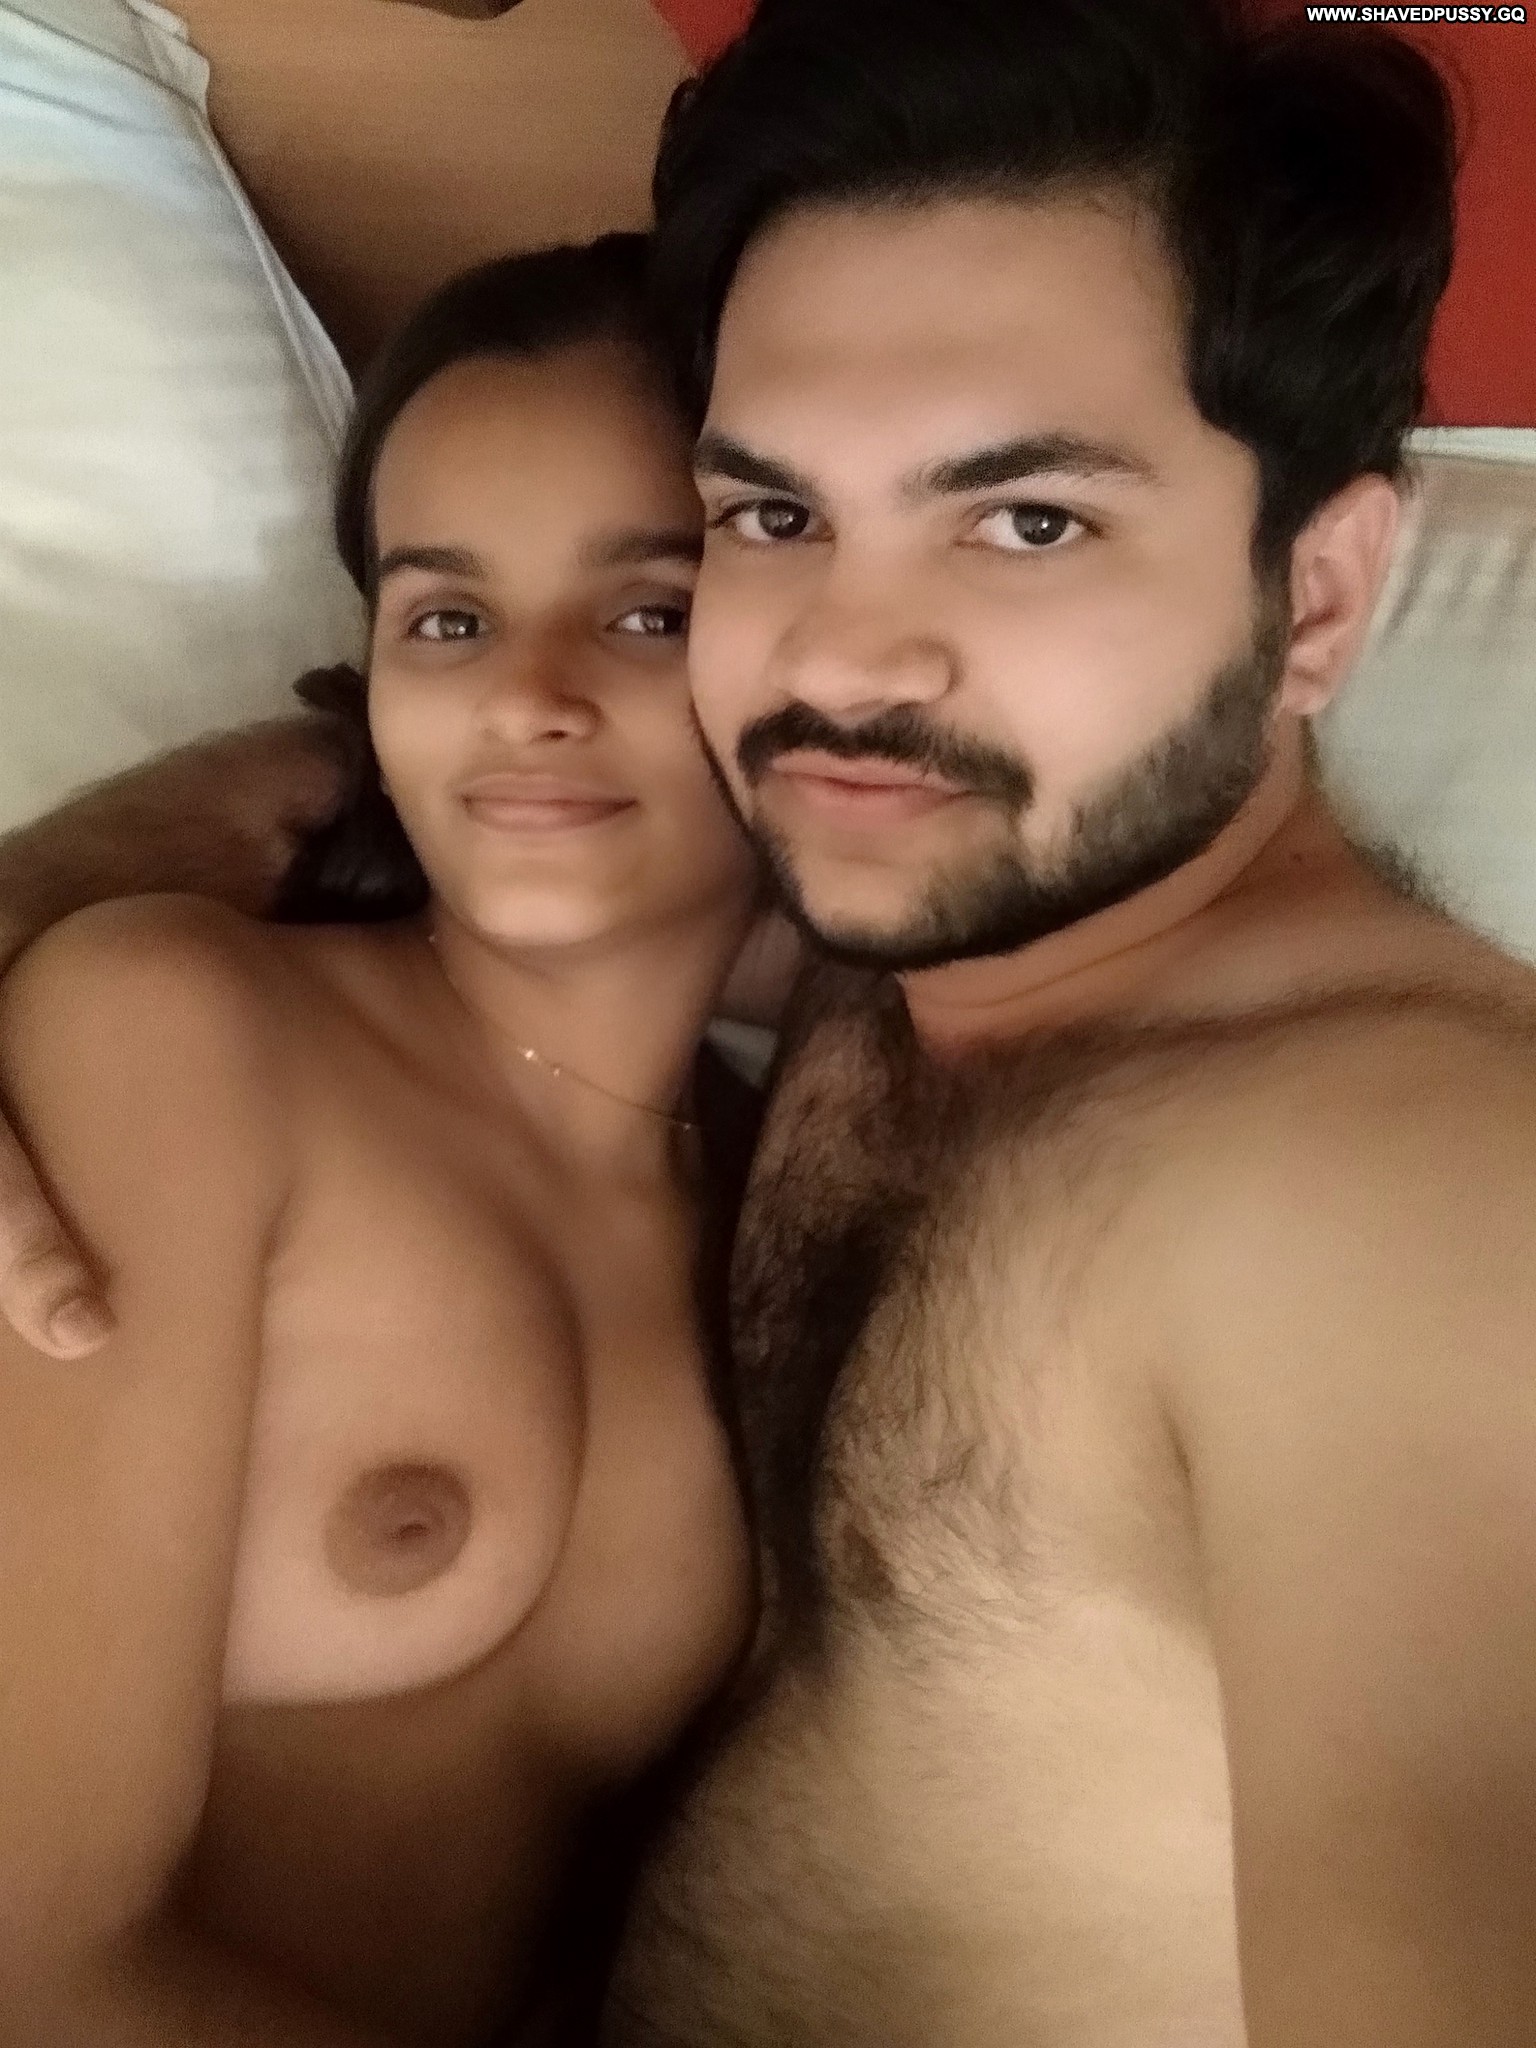 girlfriend stolen nude videos Sex Images Hq